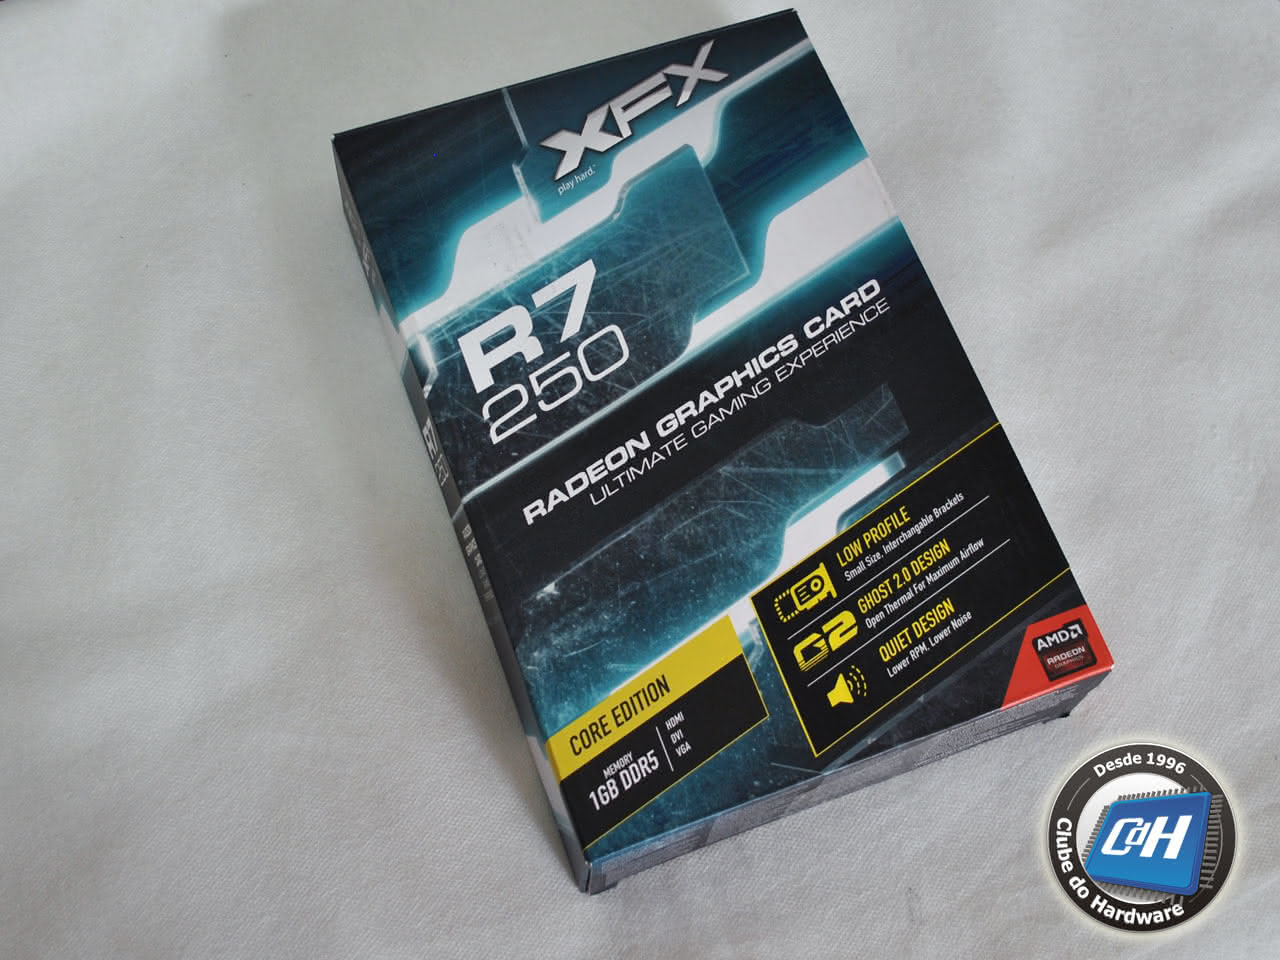 Teste da Placa de Vídeo XFX Radeon R7 250 Core Edition